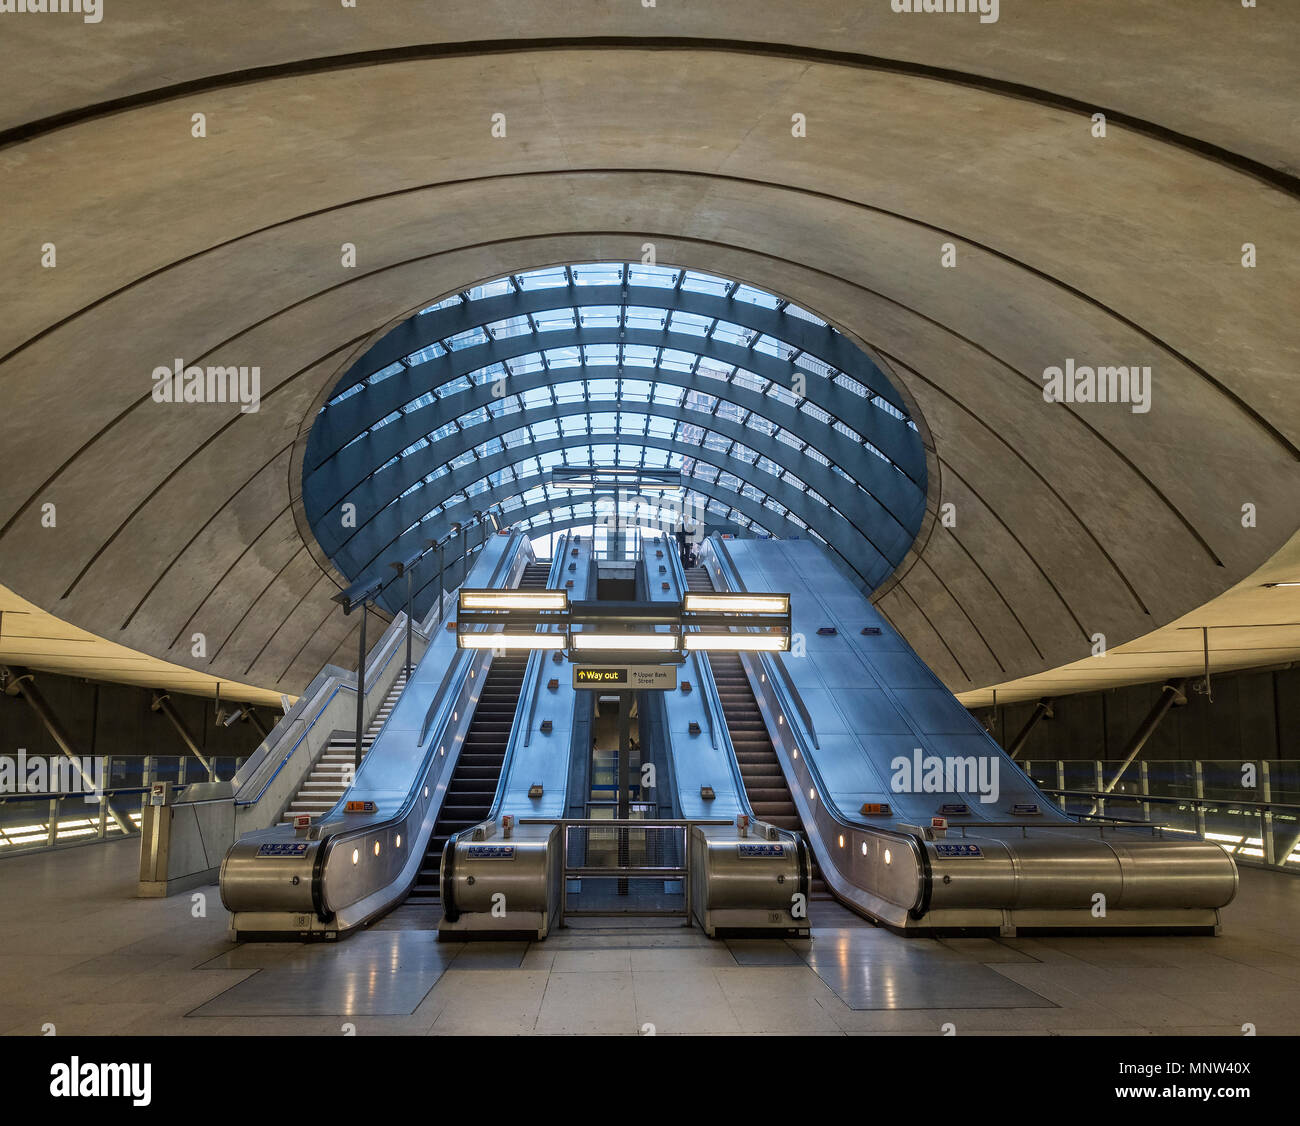 La station de métro Canary Wharf, Canary Wharf, London, England, UK Banque D'Images